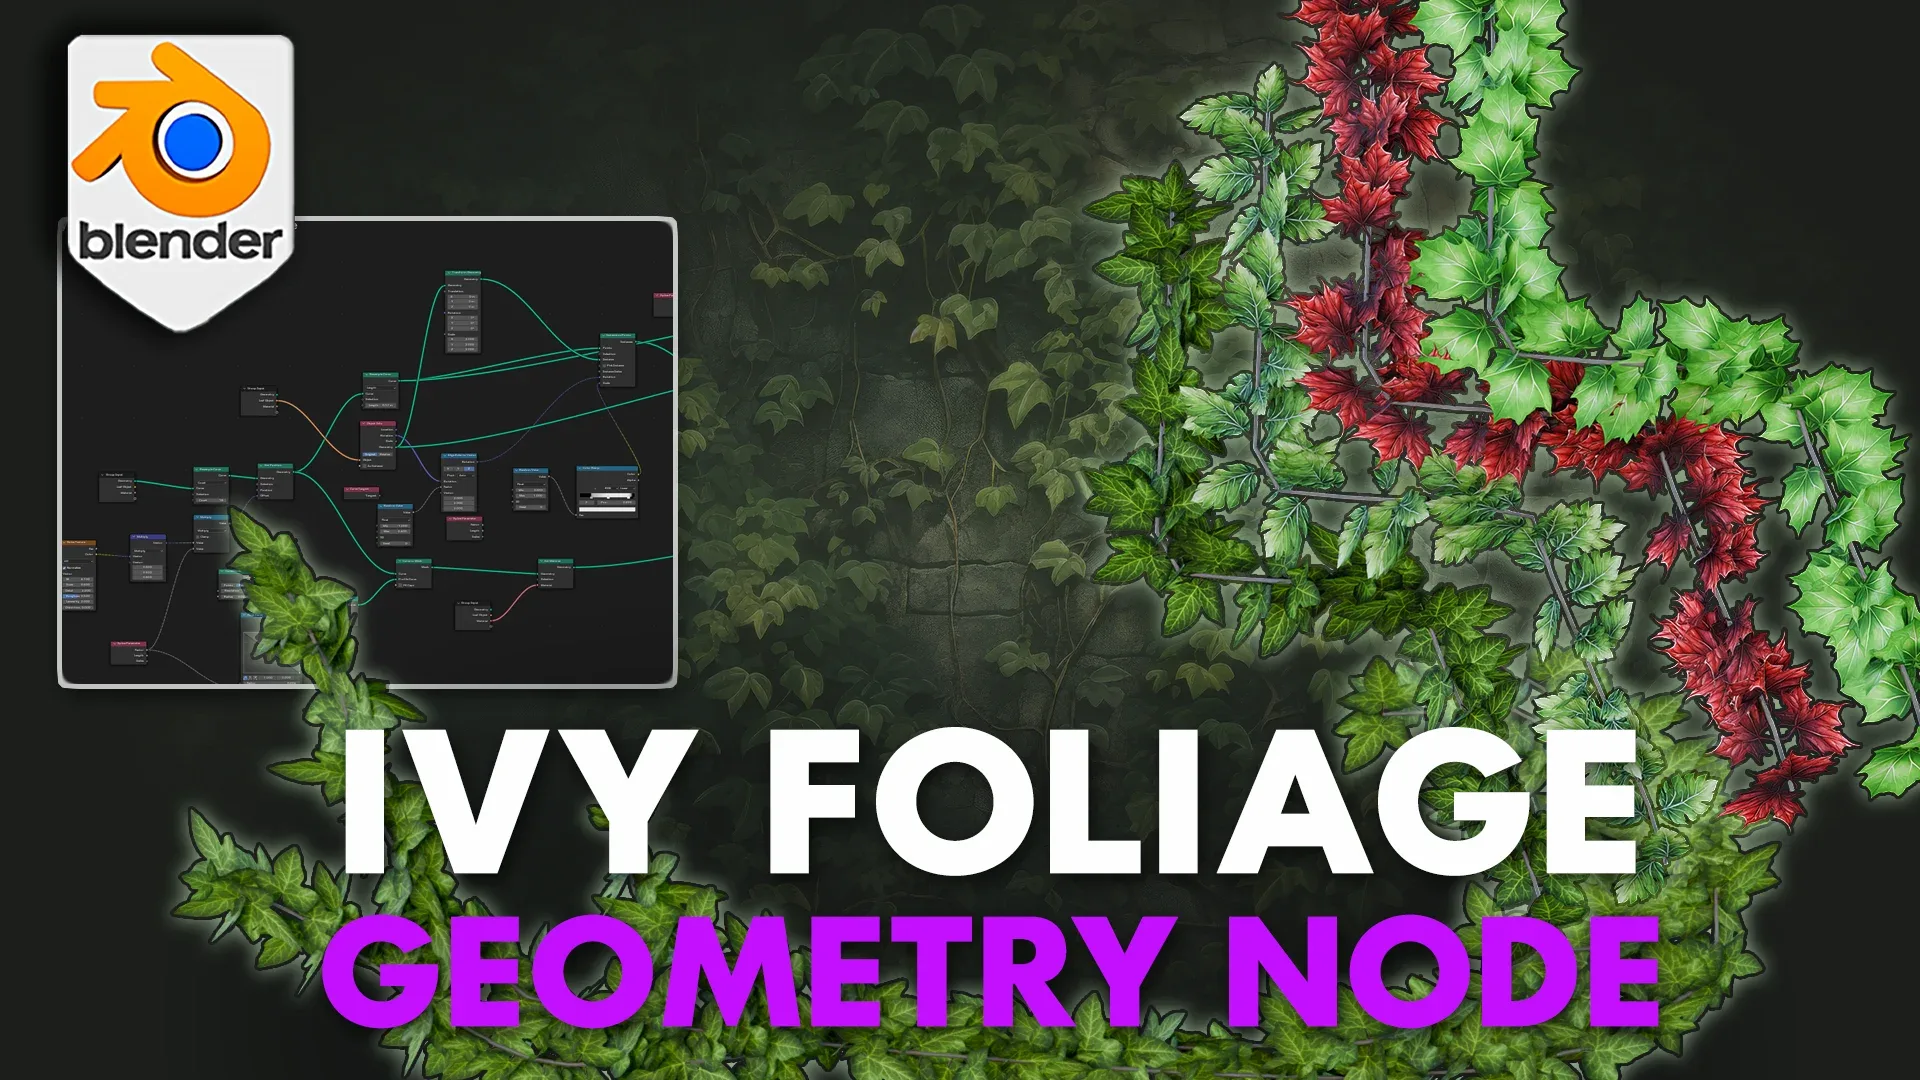 Blender 4 Ivy Foliage Geometry Node